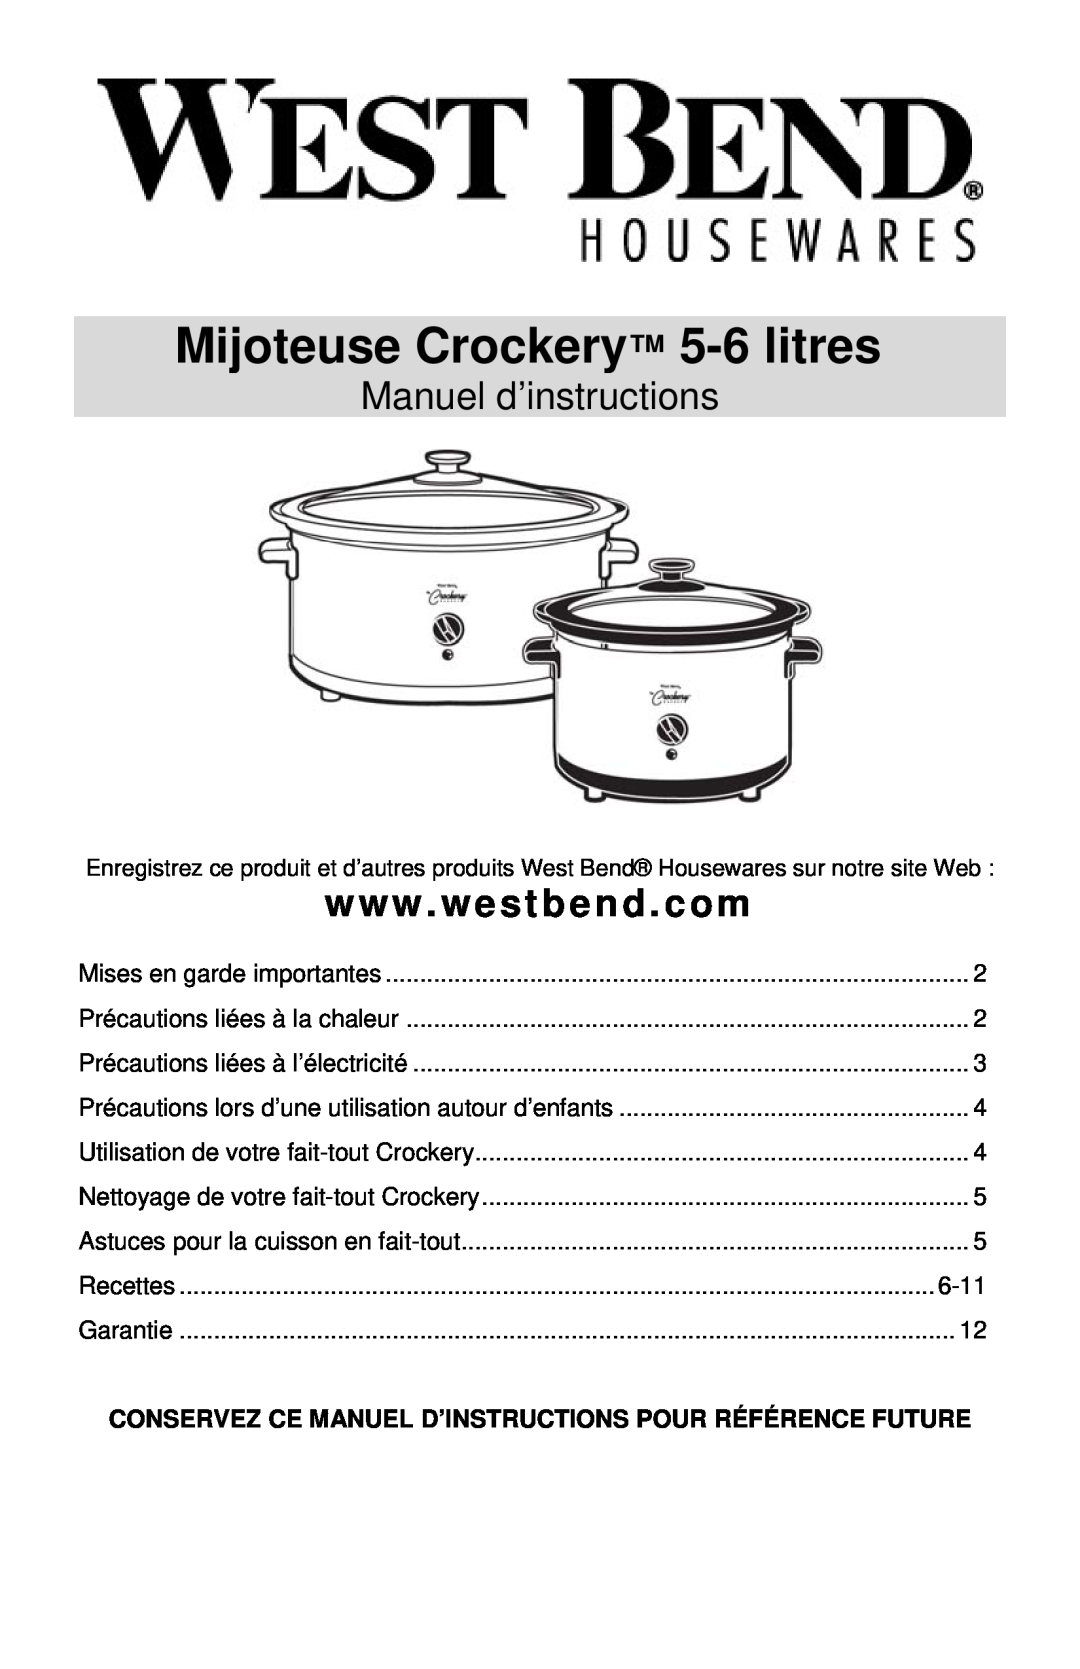 West Bend 5 6 Quart CrockeryTM Cooker instruction manual Mijoteuse Crockery 5-6litres, Manuel d’instructions 